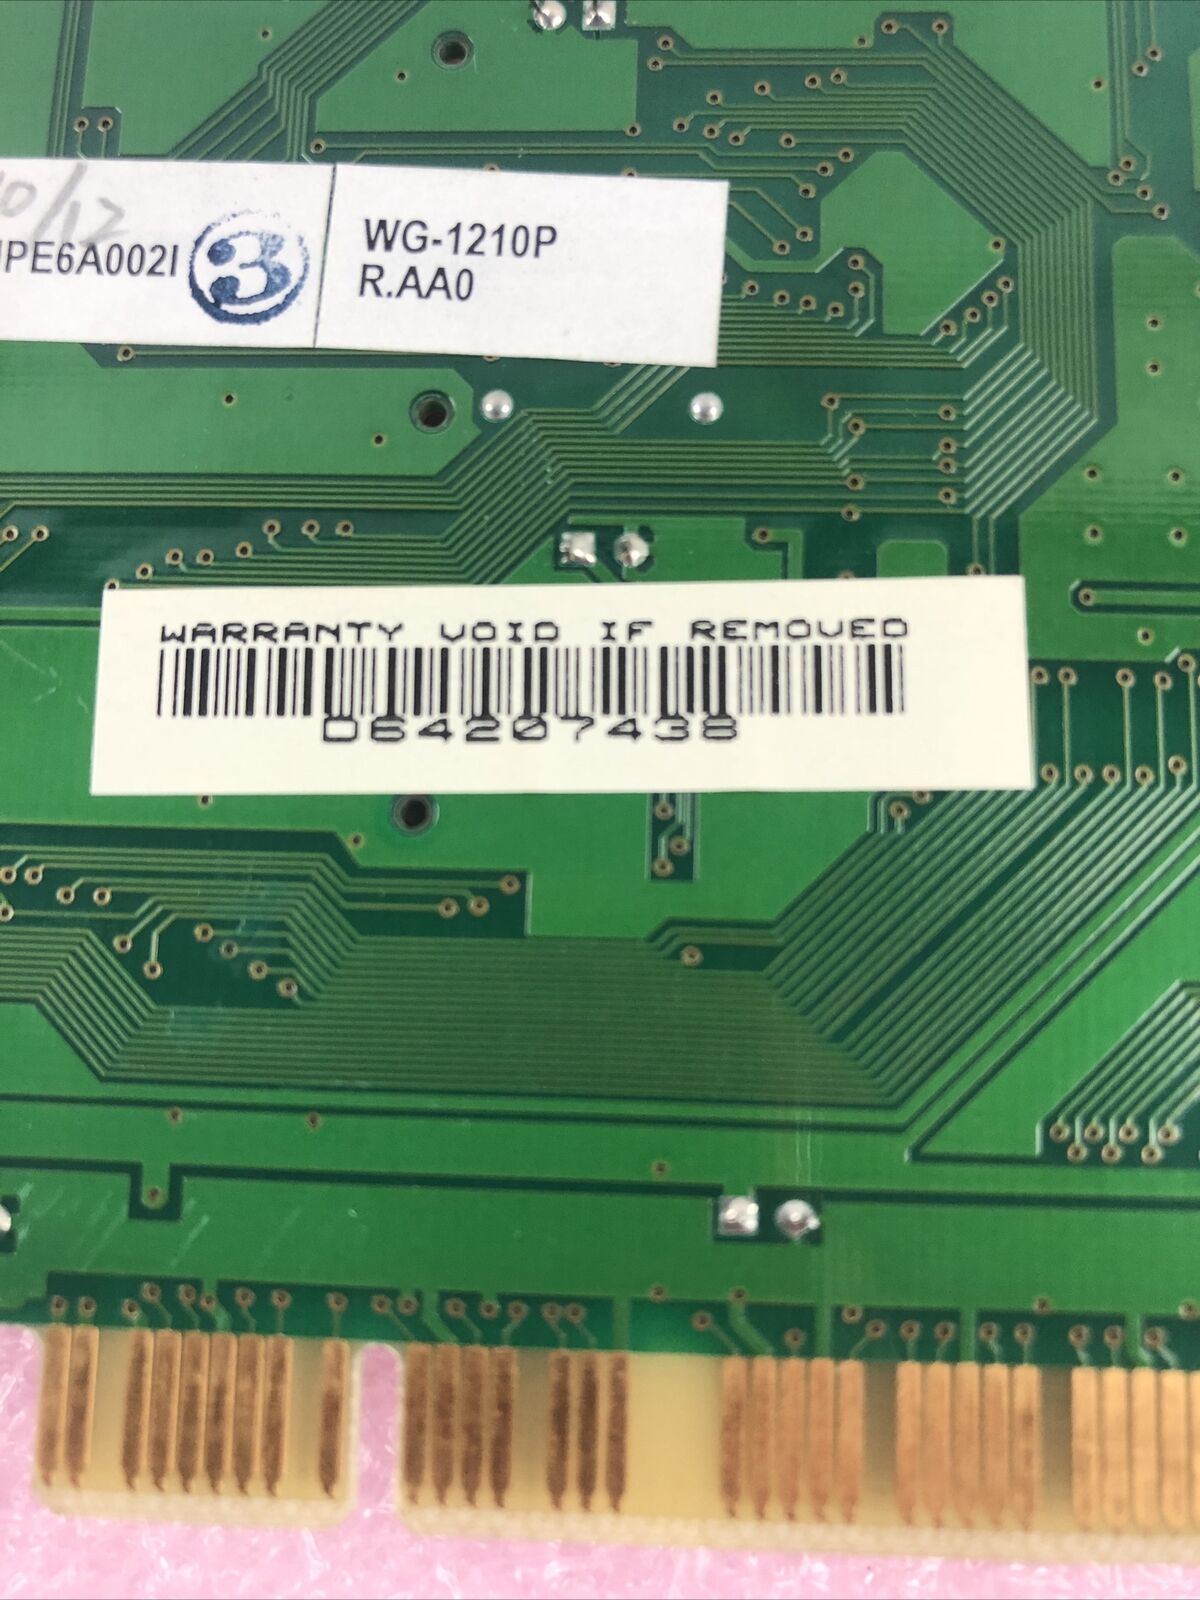 Silicon Integrated 6202-02C WG-1210P Rev.A1 VGA Video Card